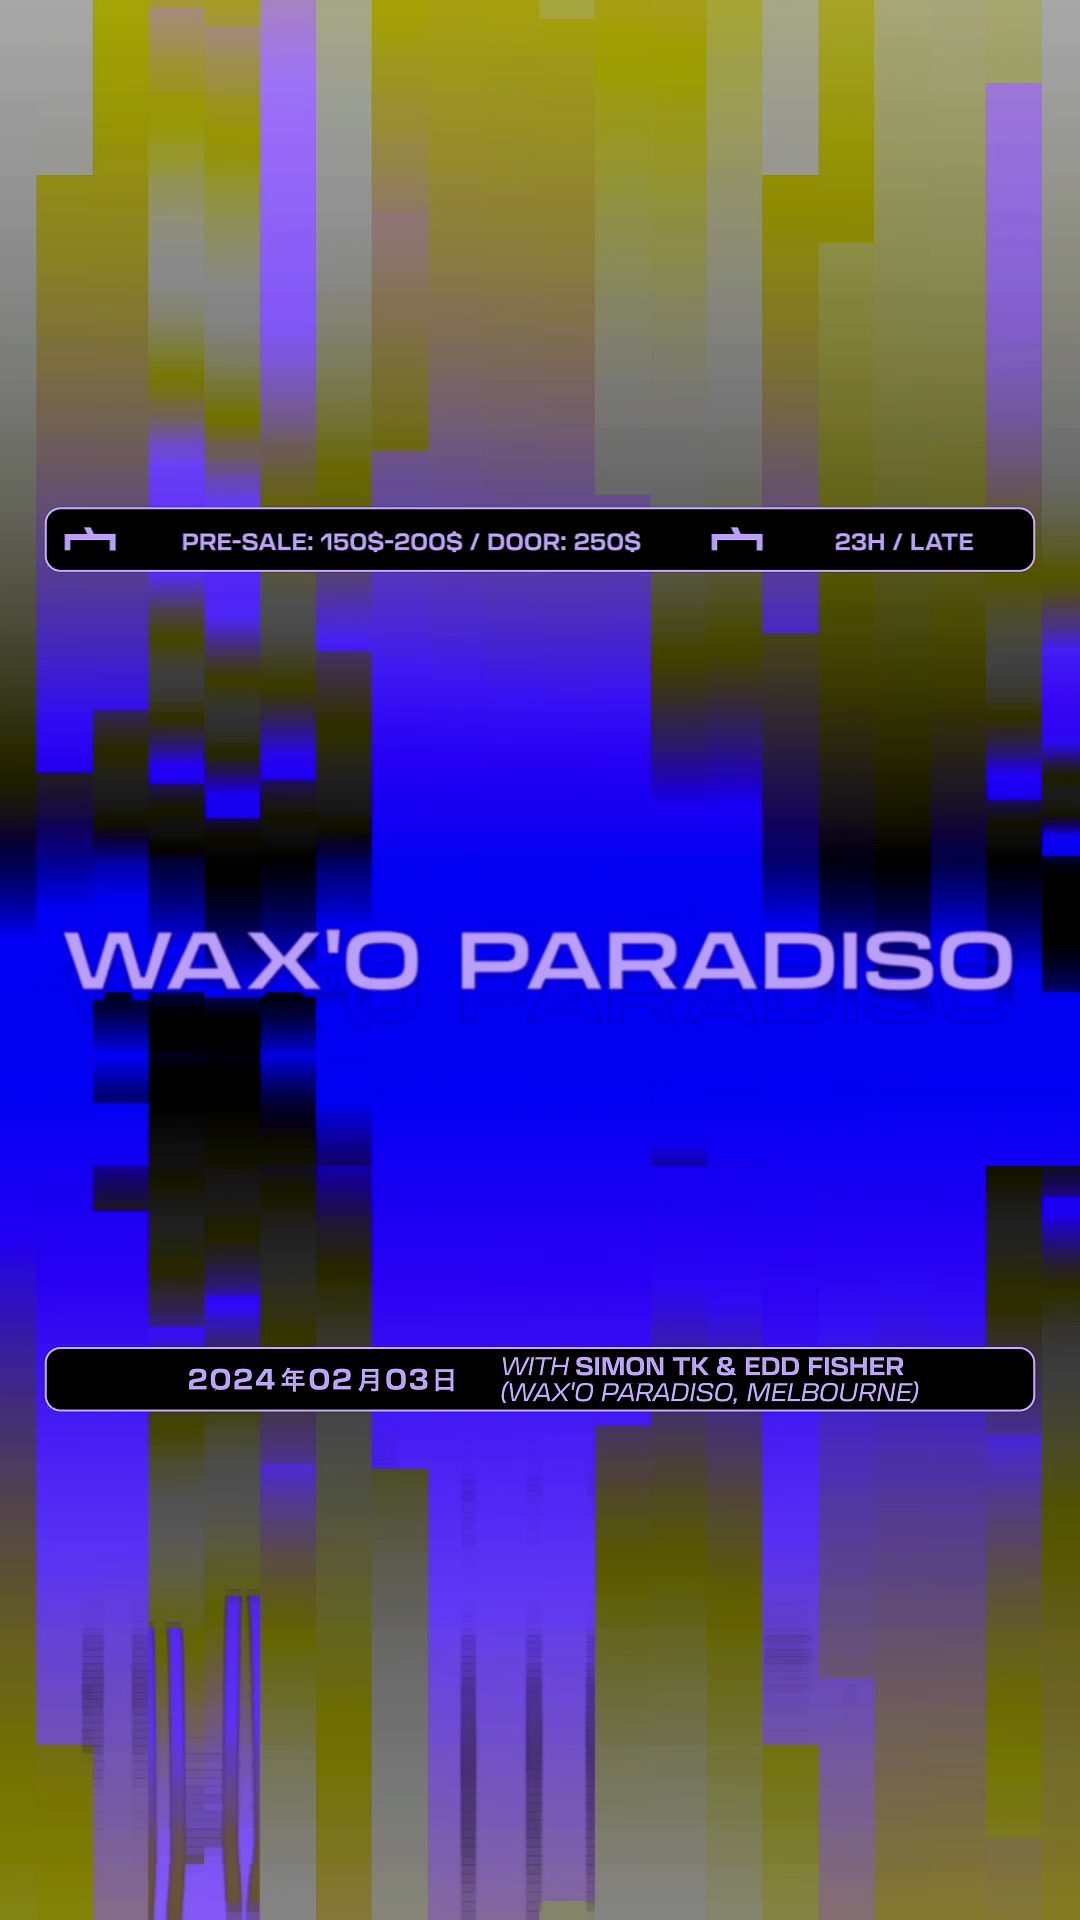 Wax'O Paradiso with Simon TK & Edd Fisher (Wax'O Paradiso, Melbourne) - フライヤー表